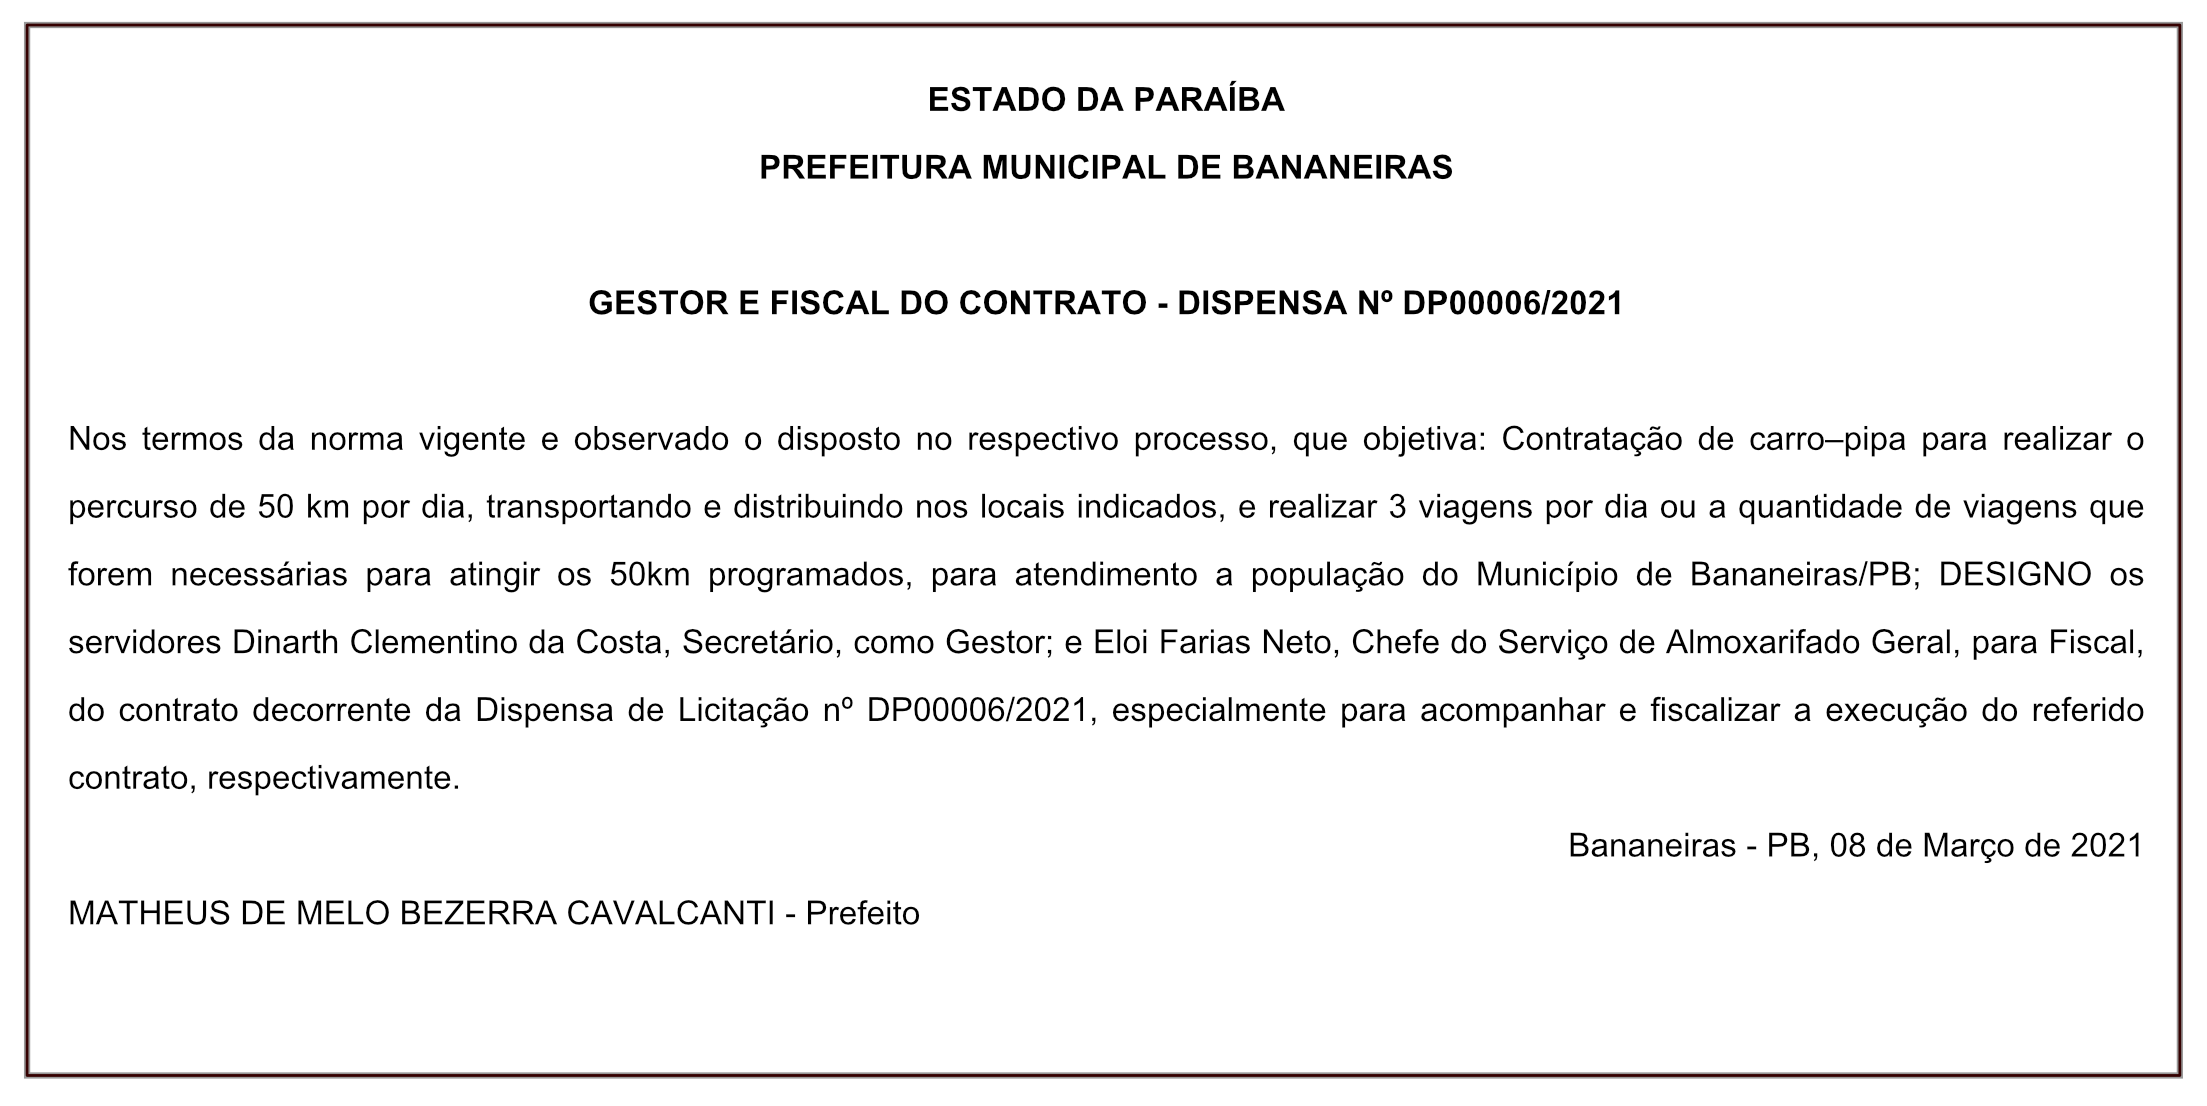 PREFEITURA MUNICIPAL DE BANANEIRAS – GESTOR E FISCAL DO CONTRATO – DISPENSA Nº DP00006/2021